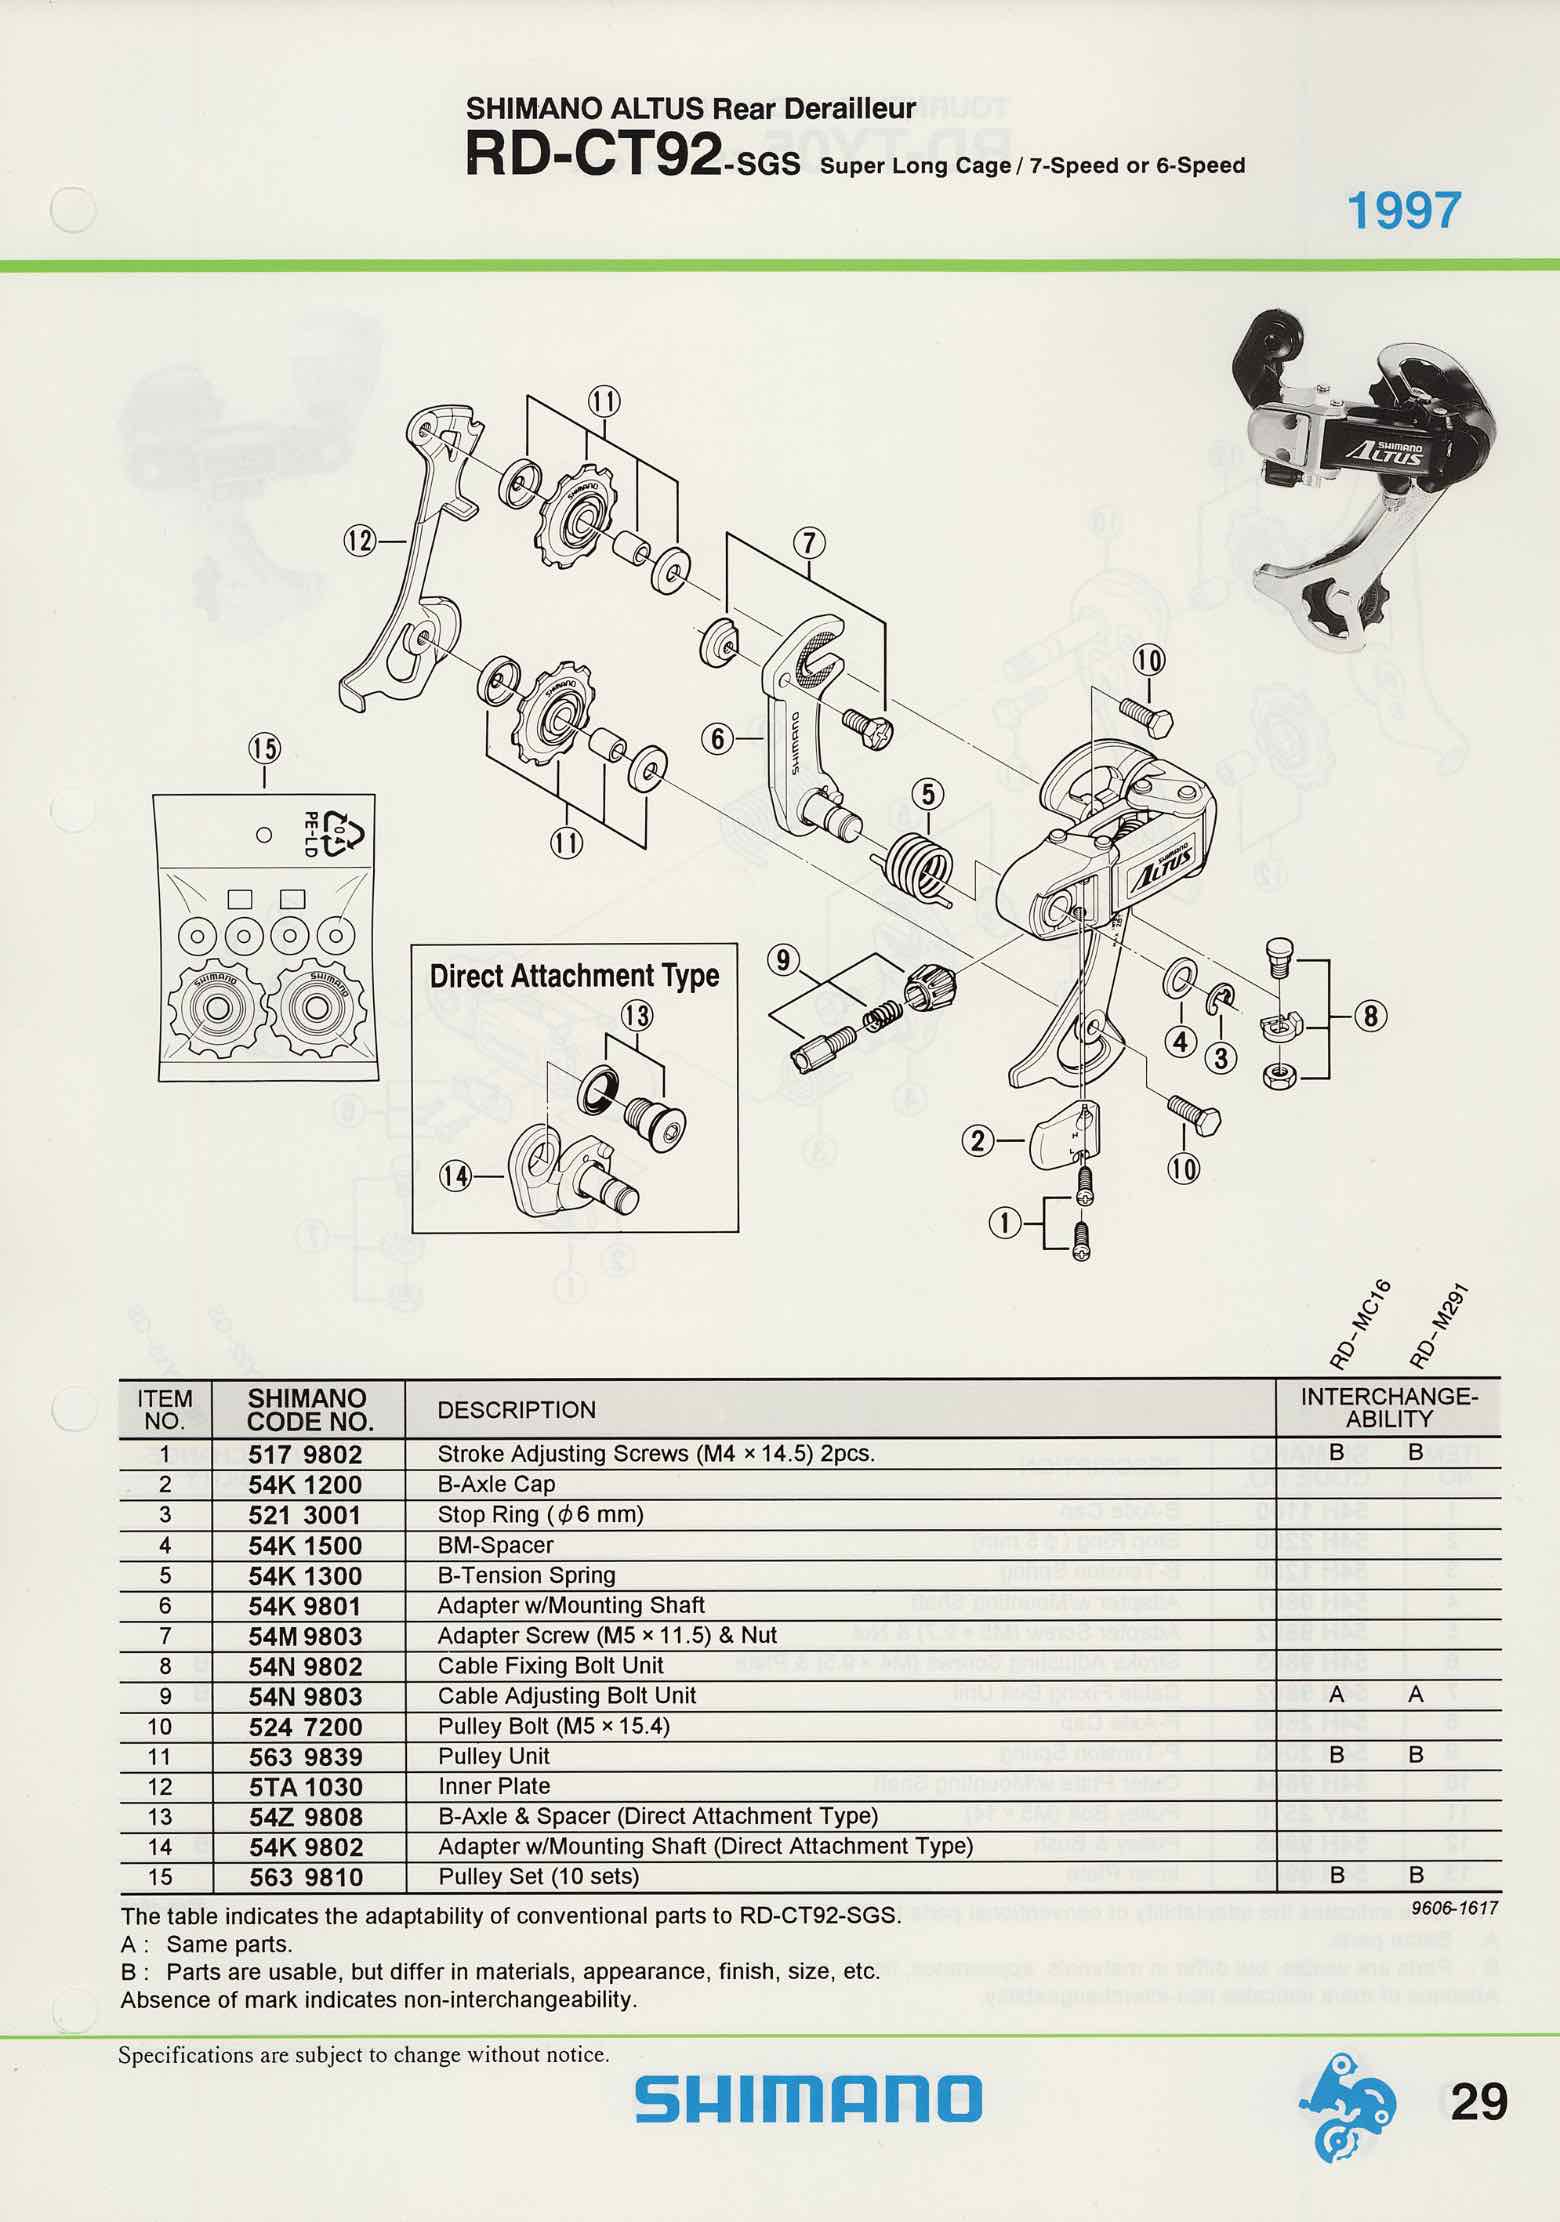 Shimano Spare Parts Catalogue - 1994 to 2004 s5 p29 main image